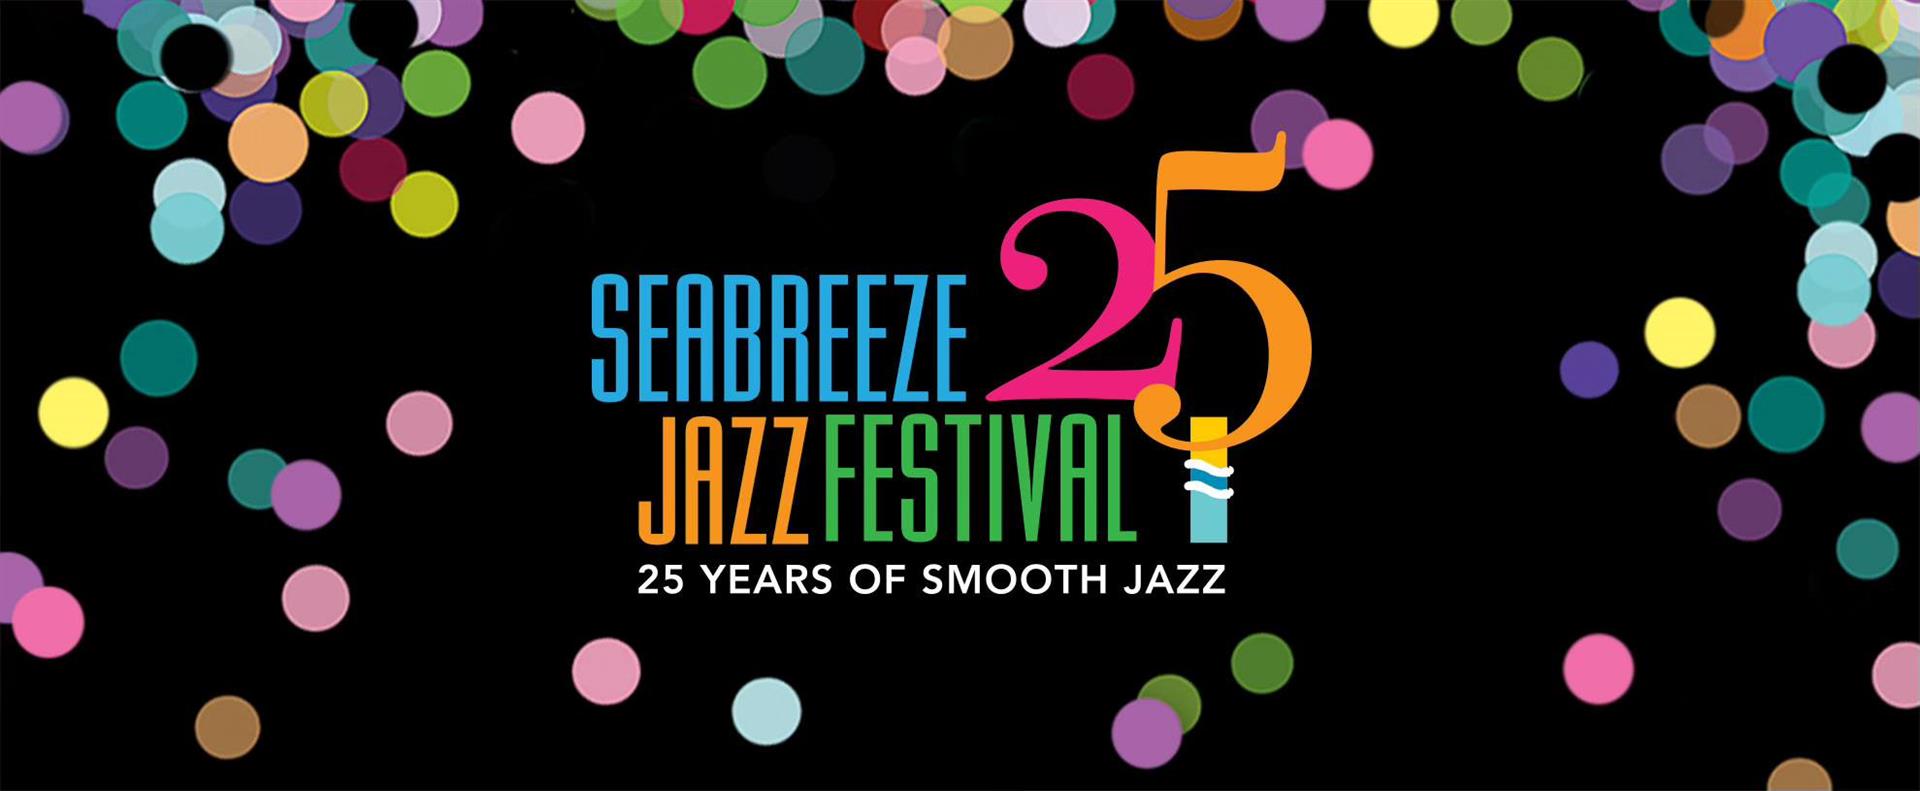 Seabreeze Jazz Fest 25